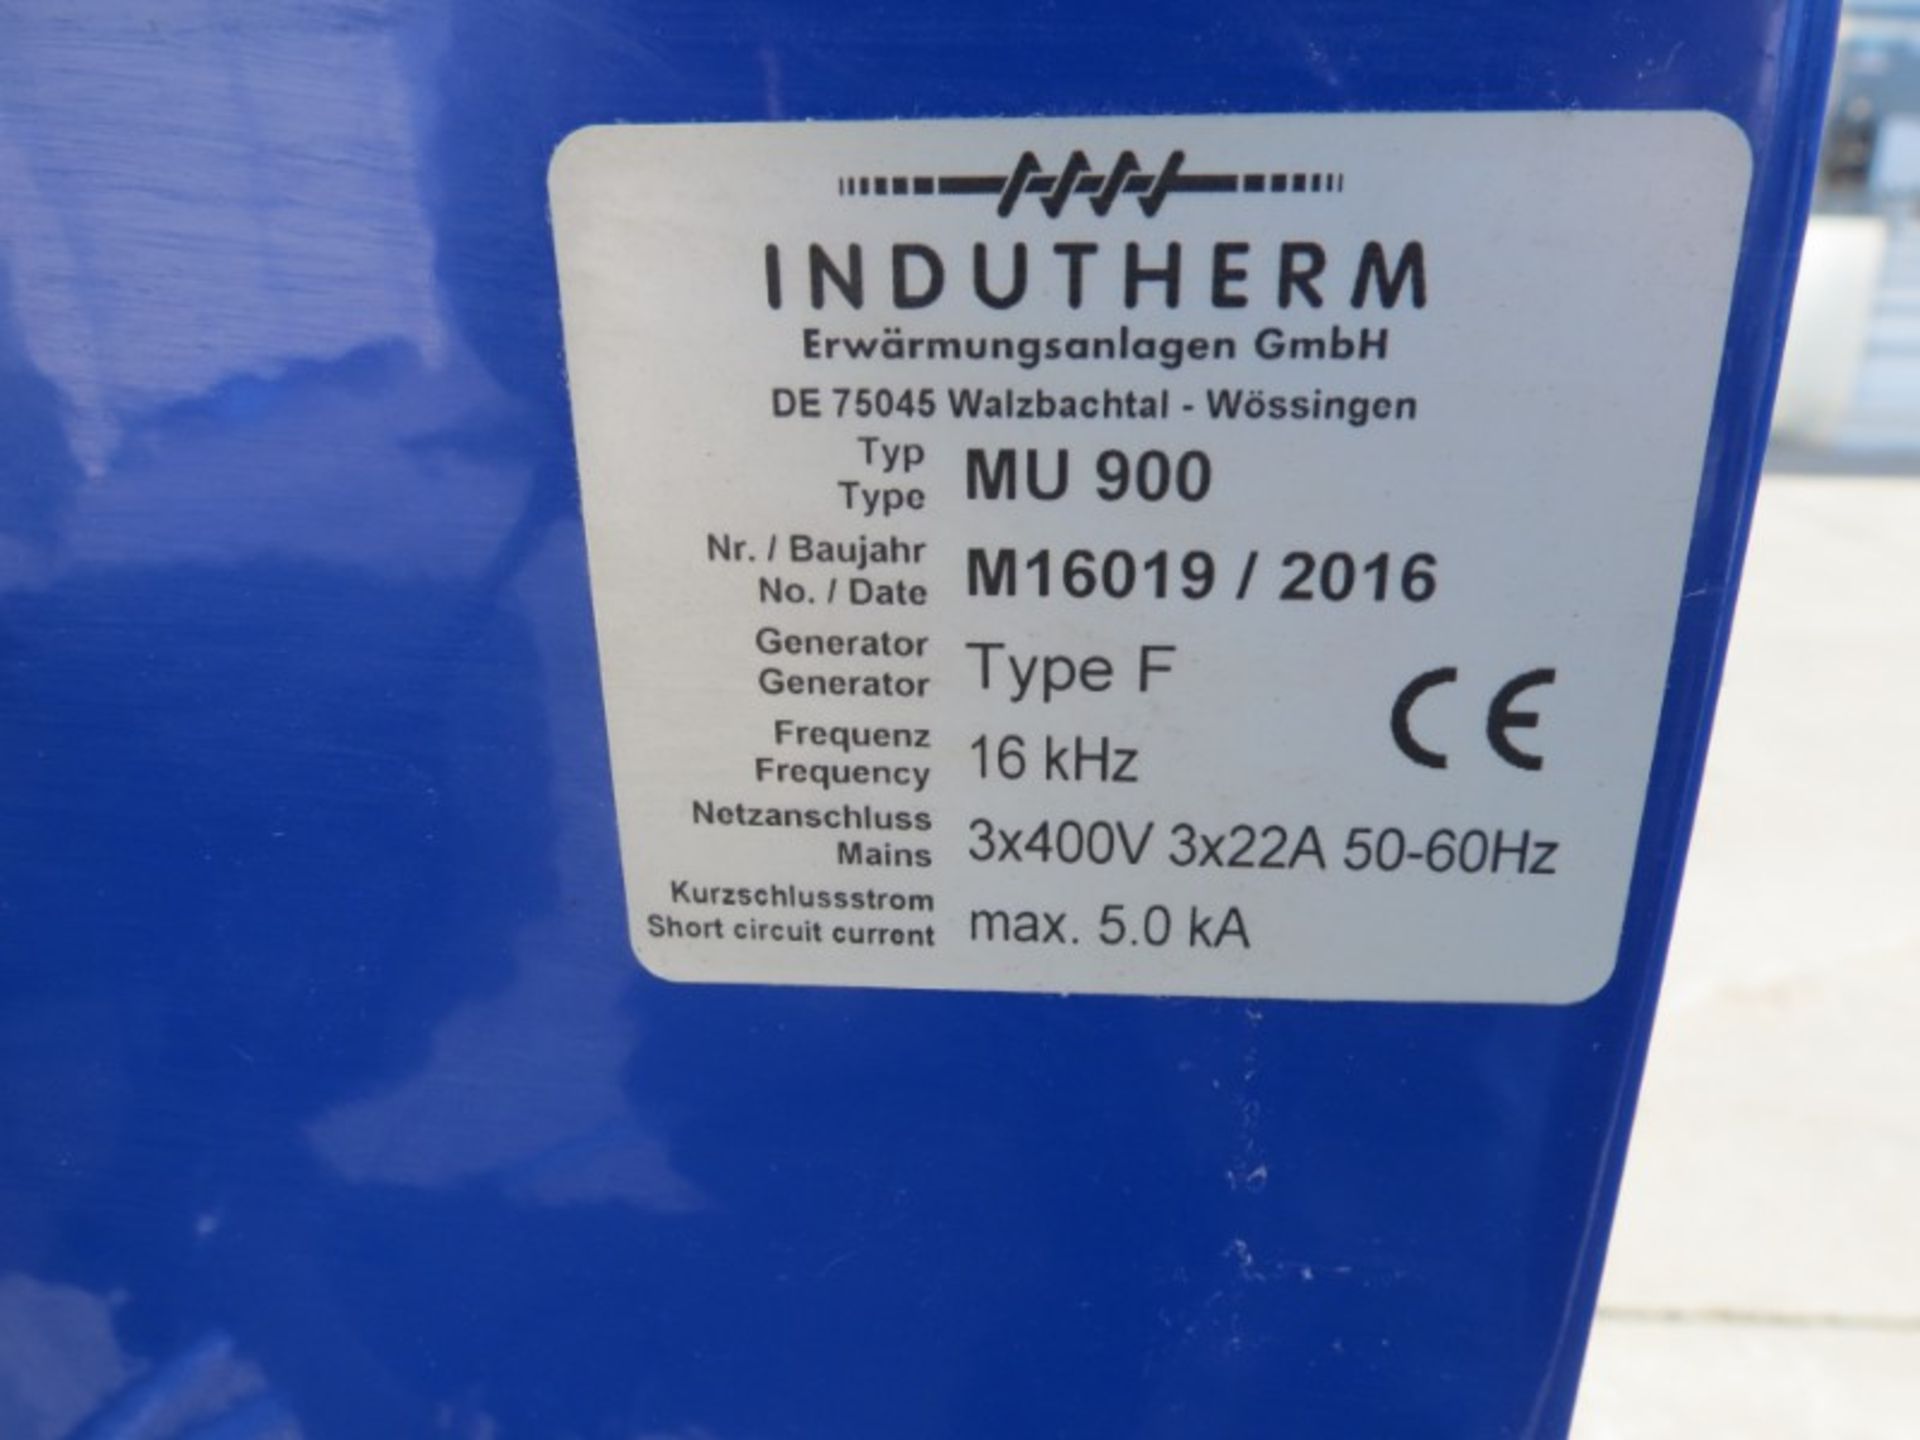 Indutherm-MU900 Furnace, New 2016 - Image 4 of 4